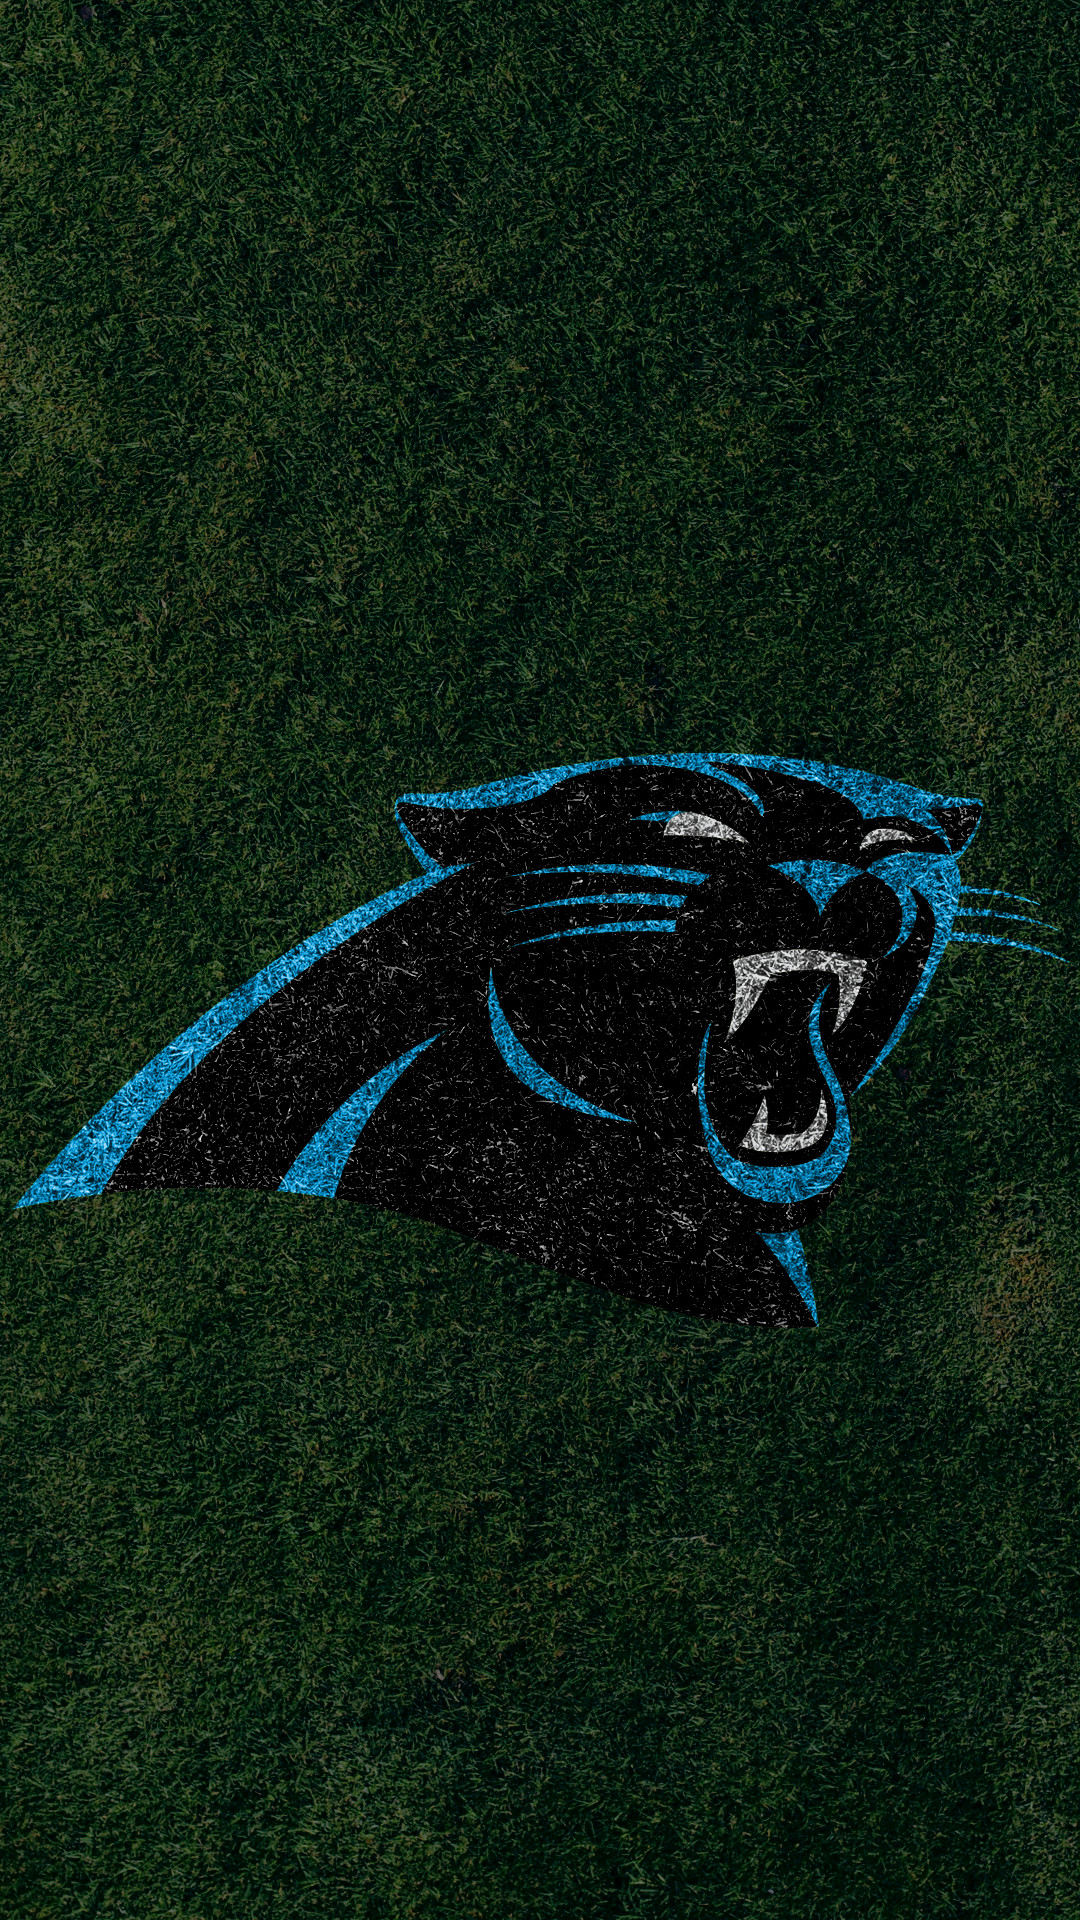 1080x1920 ... galaxy Carolina Panthers 2017 turf logo wallpaper free iphone 5, 6, 7,  galaxy s6